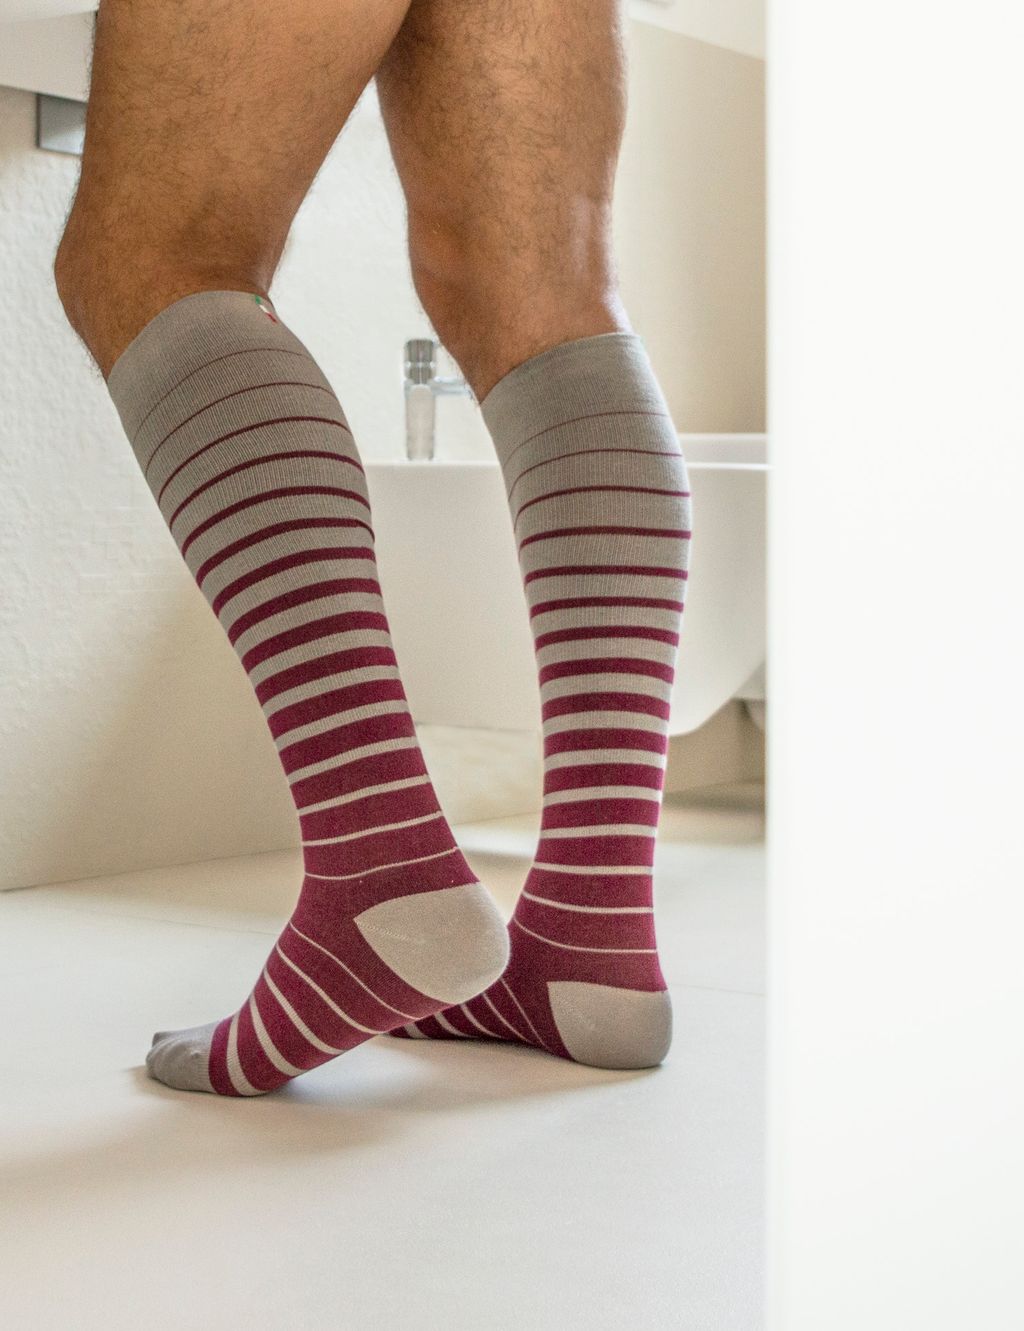 Relaxsan Fancy Cotton Socks Гольфы с хлопком 1 класс компрессии унисекс, р. 5, арт. 820 Fancy (18-22 mm Hg), бордо-полоски, пара, 1 шт.